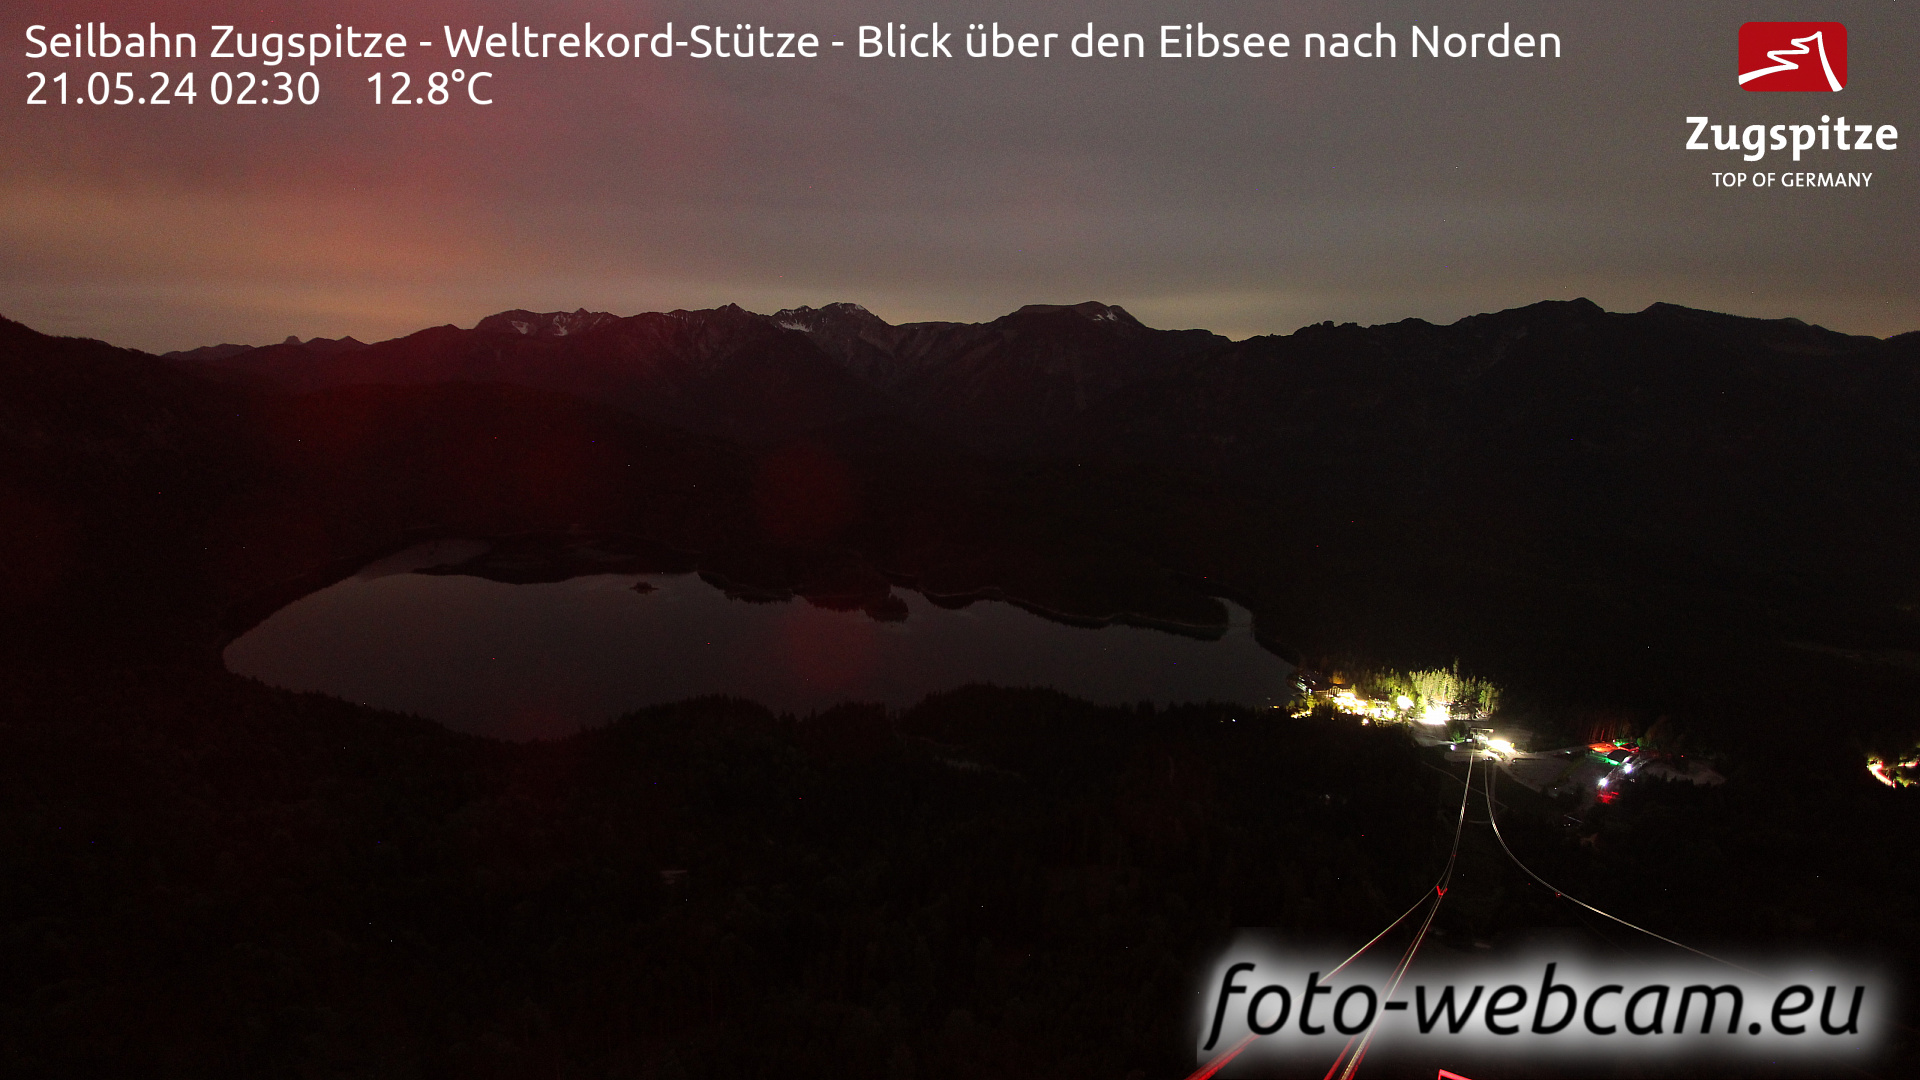 Zugspitze Mar. 02:49